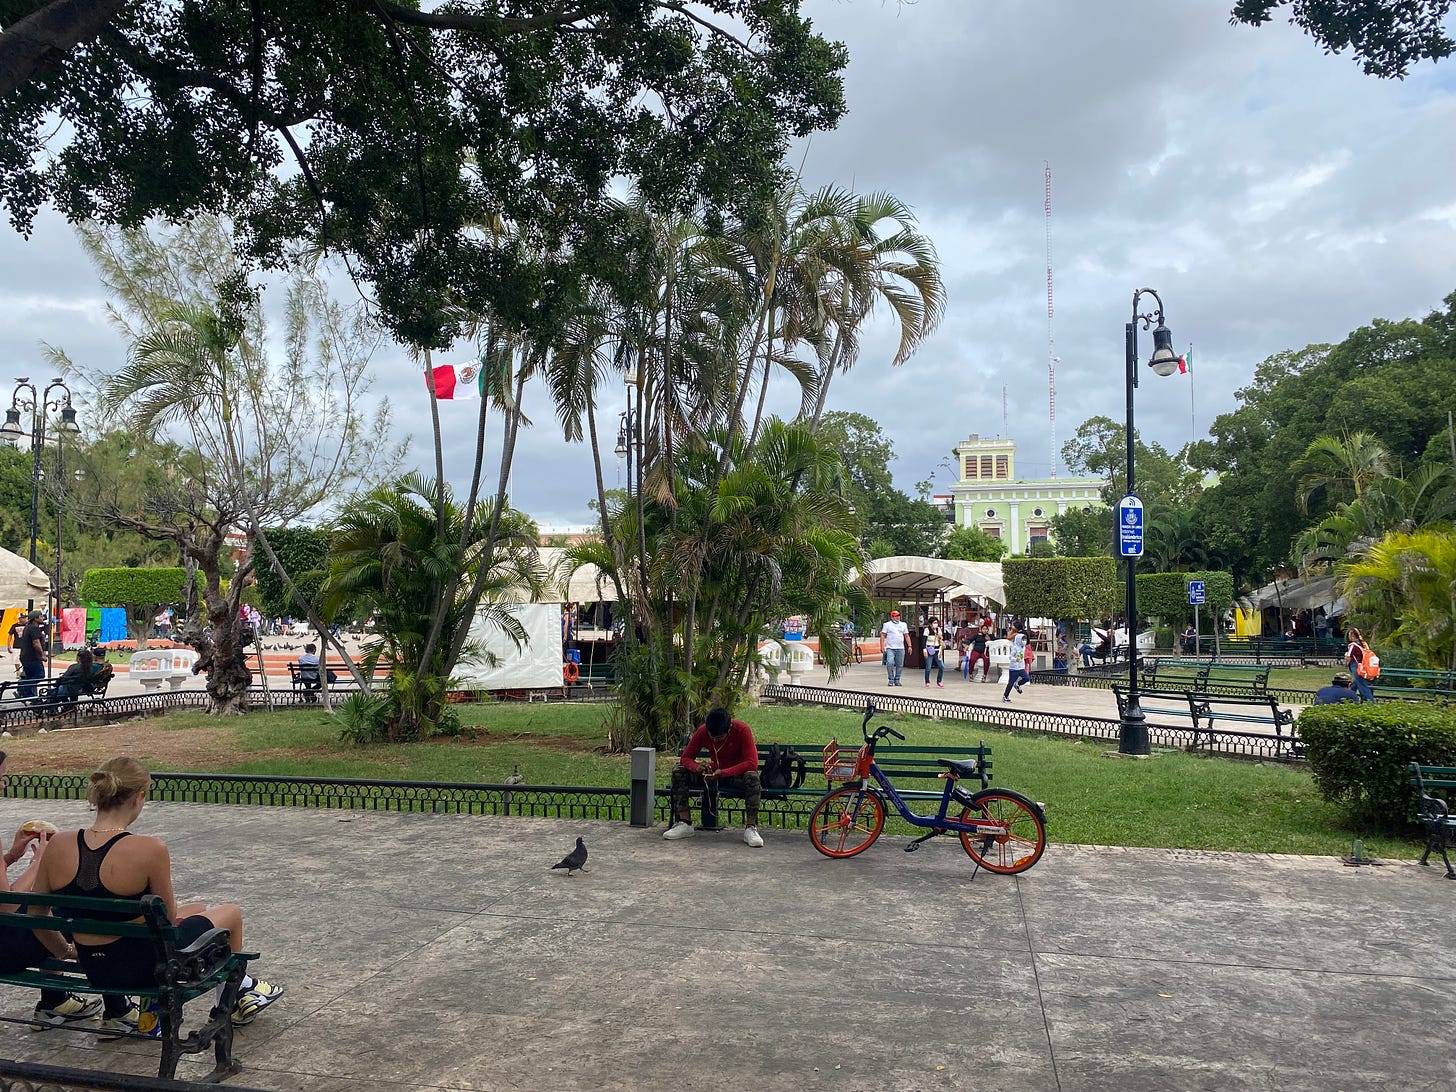 Trees and wide sidewalks of the Plaza Grande, Merida.